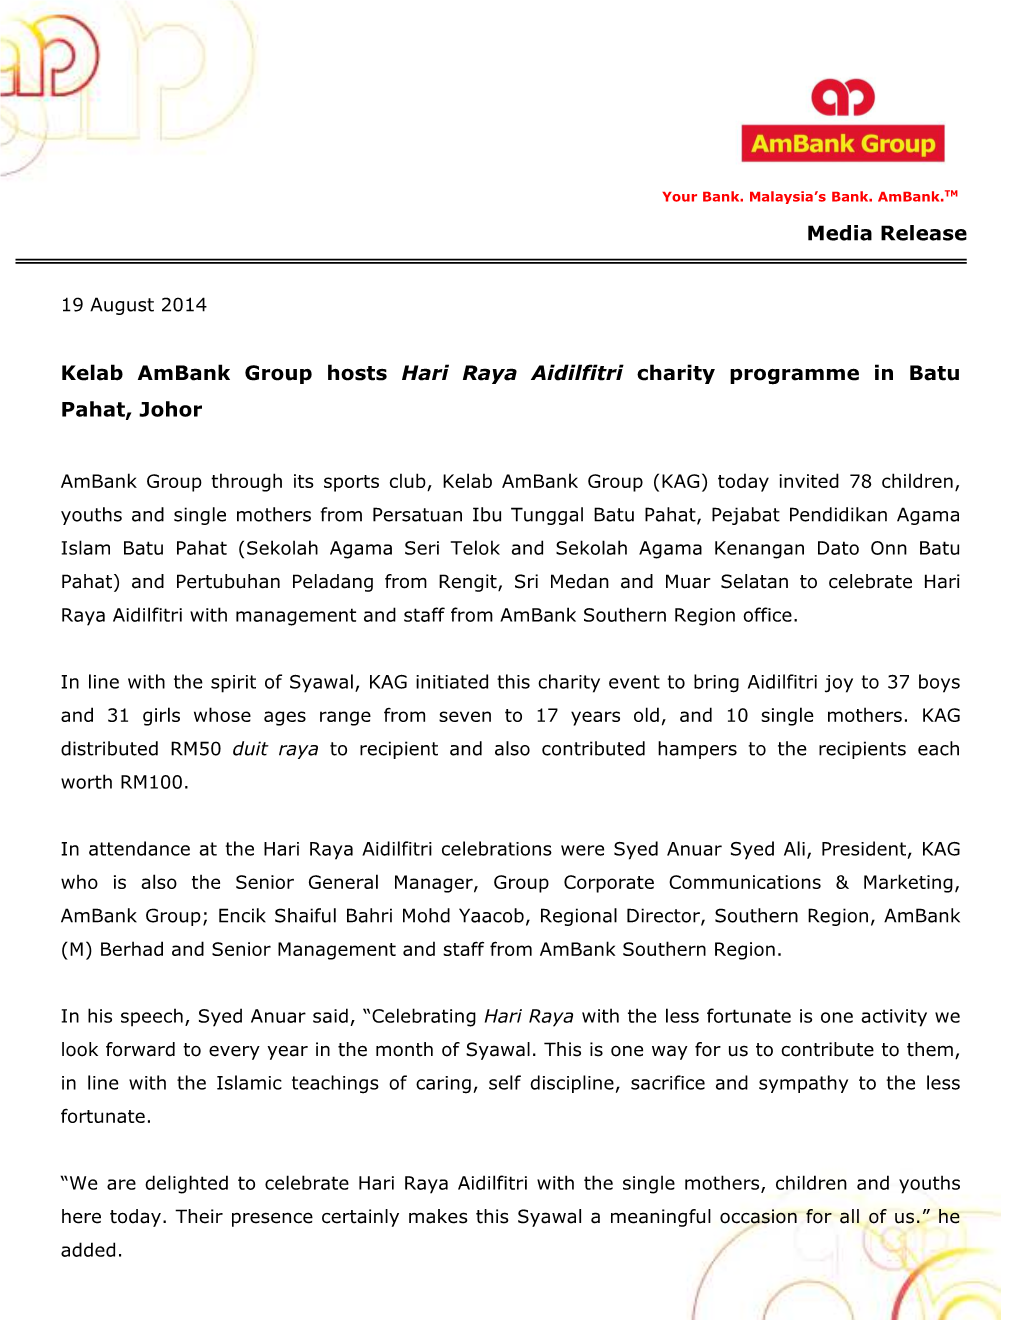 20140819 Kelab Ambank Group Hosts Hari Raya Aidilfitri Charity